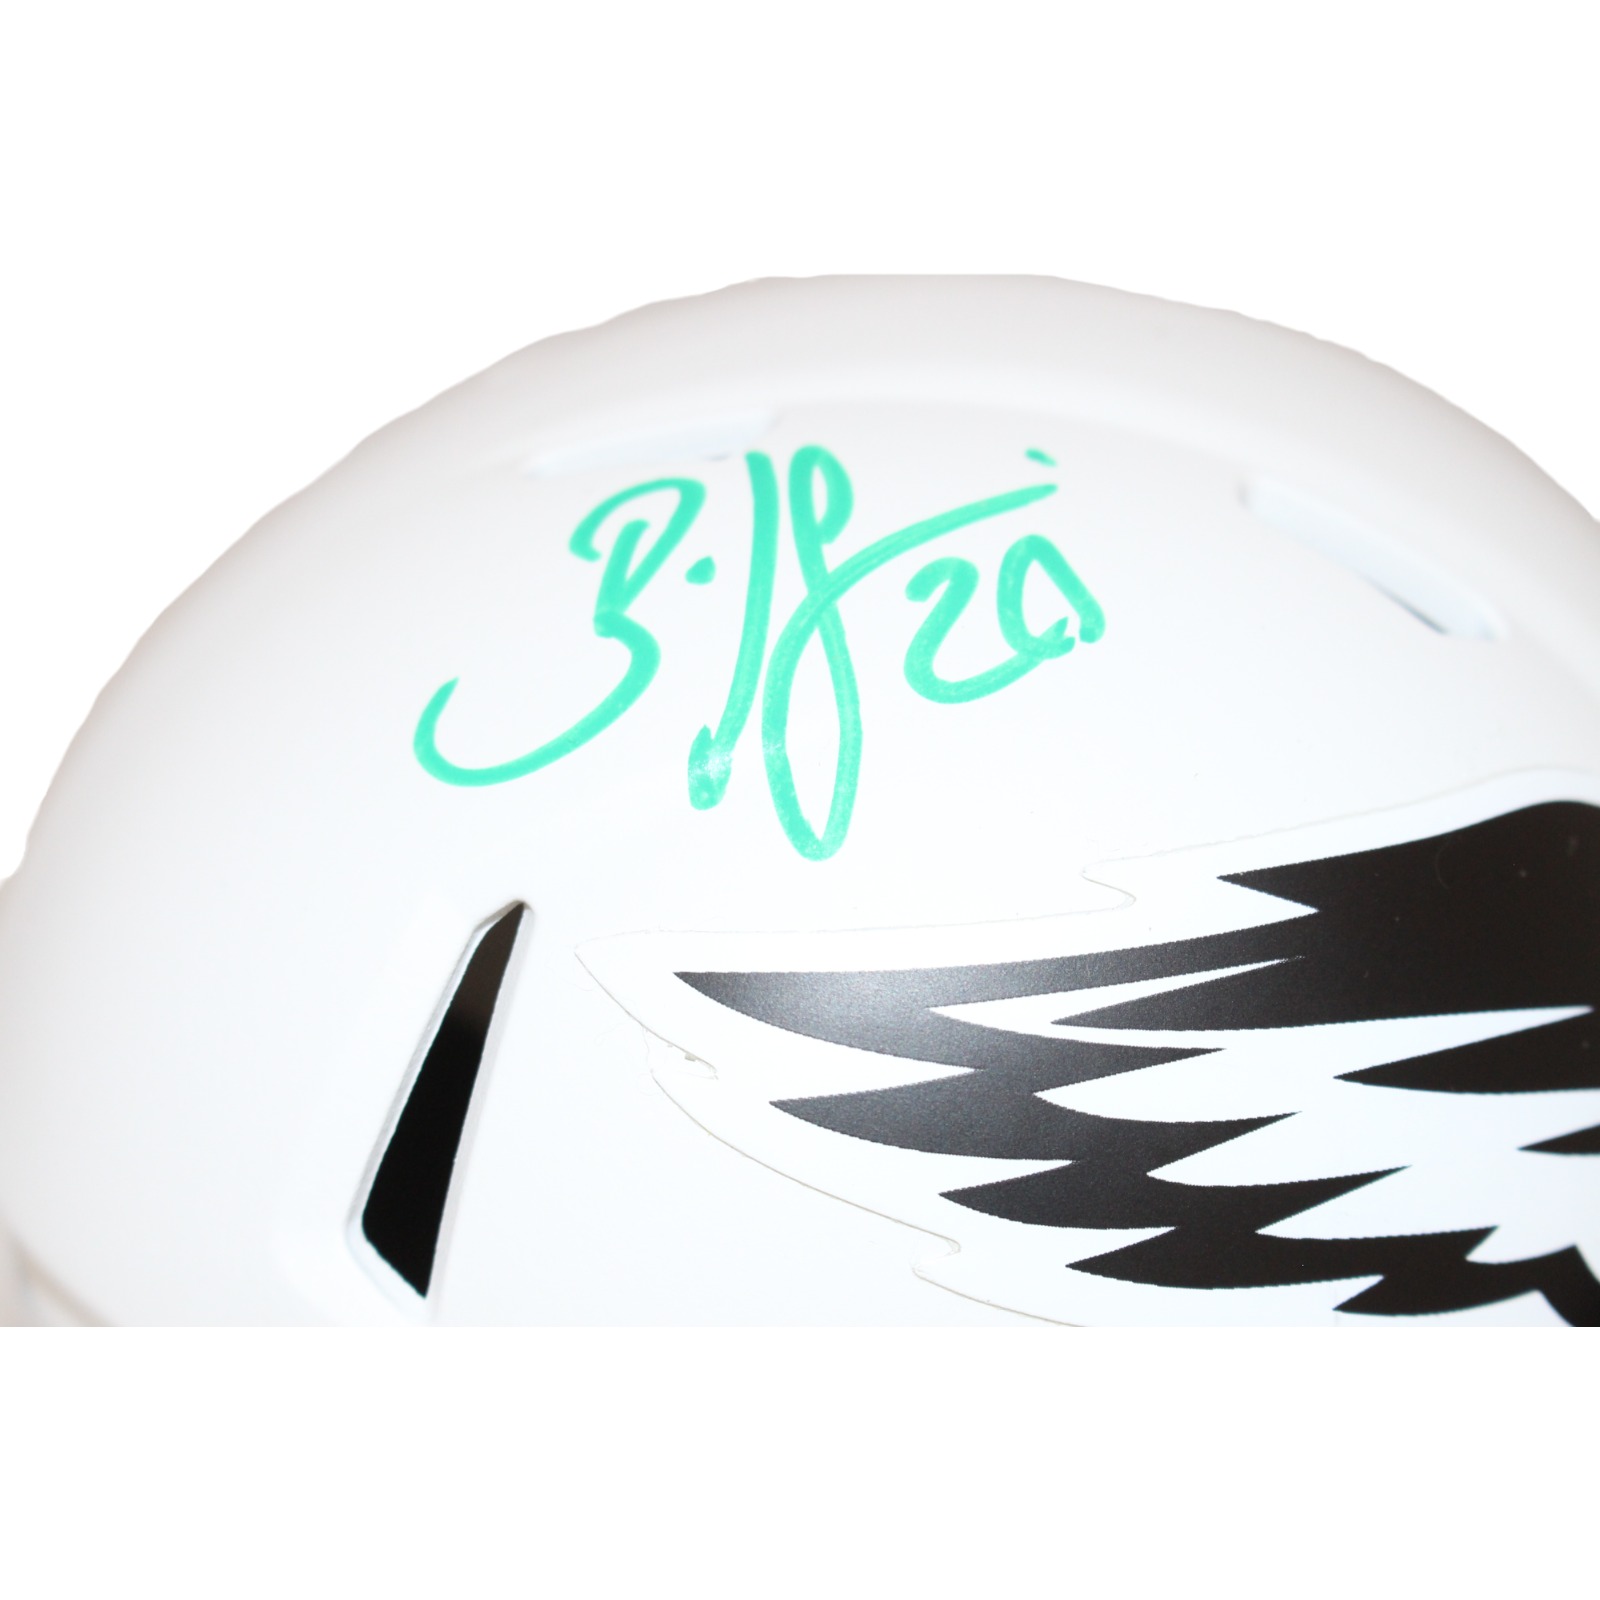 Brian Dawkins Signed Philadelphia Eagles Lunar Mini Helmet Beckett